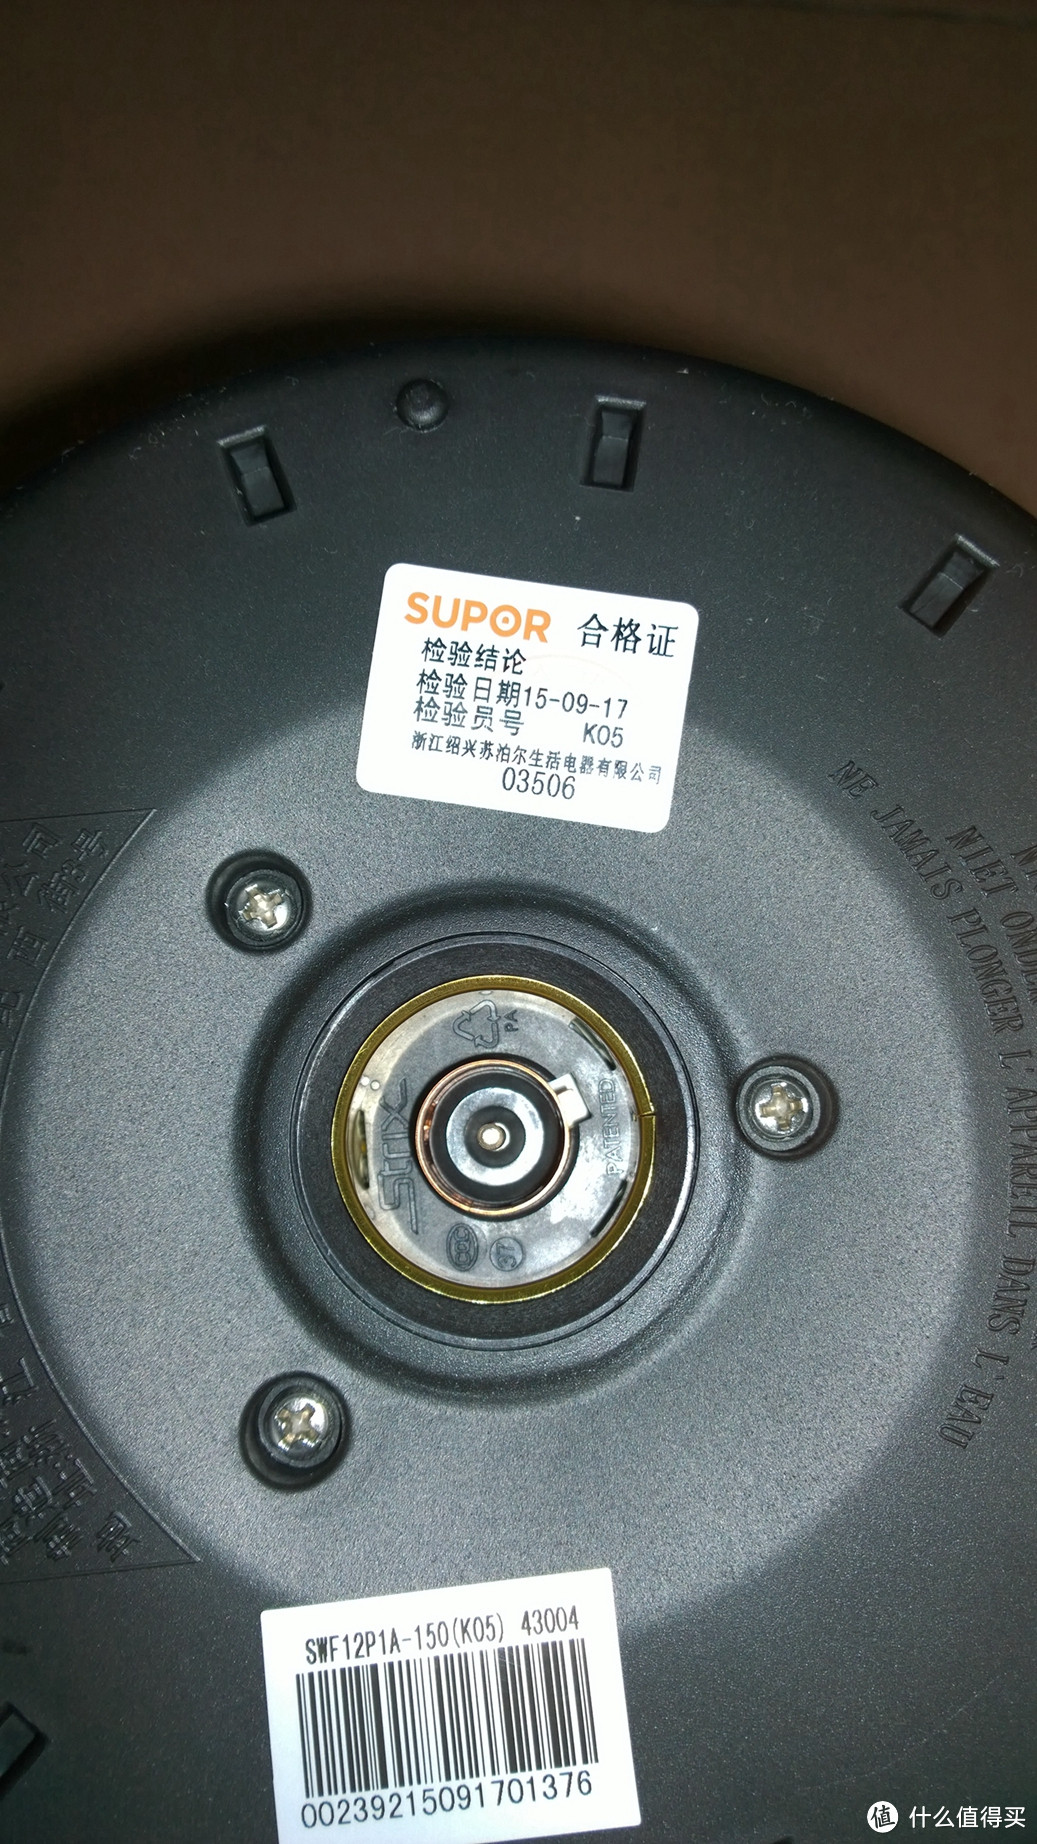 SUPOR 苏泊尔 电热水壶 SWF12P1A-150 1.2L